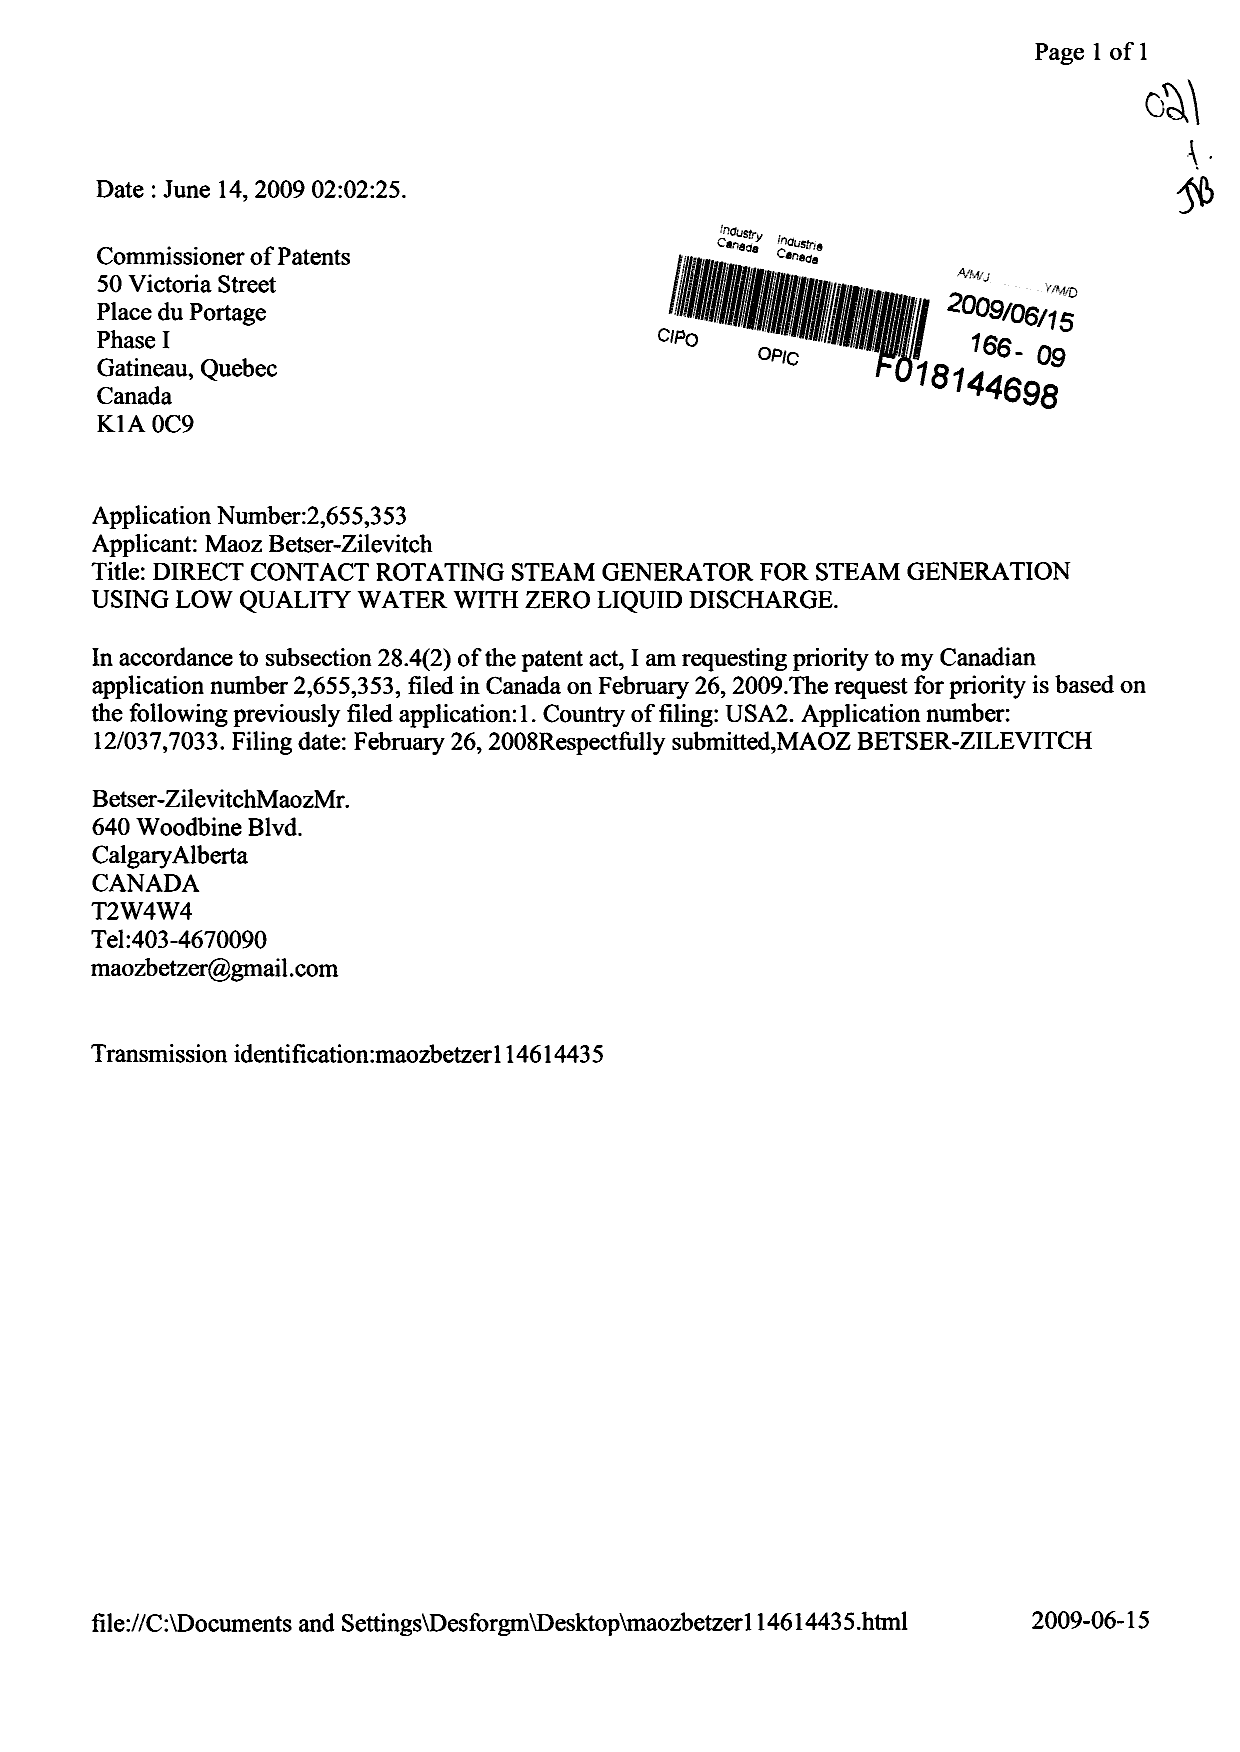 Canadian Patent Document 2655353. Correspondence 20090615. Image 1 of 1